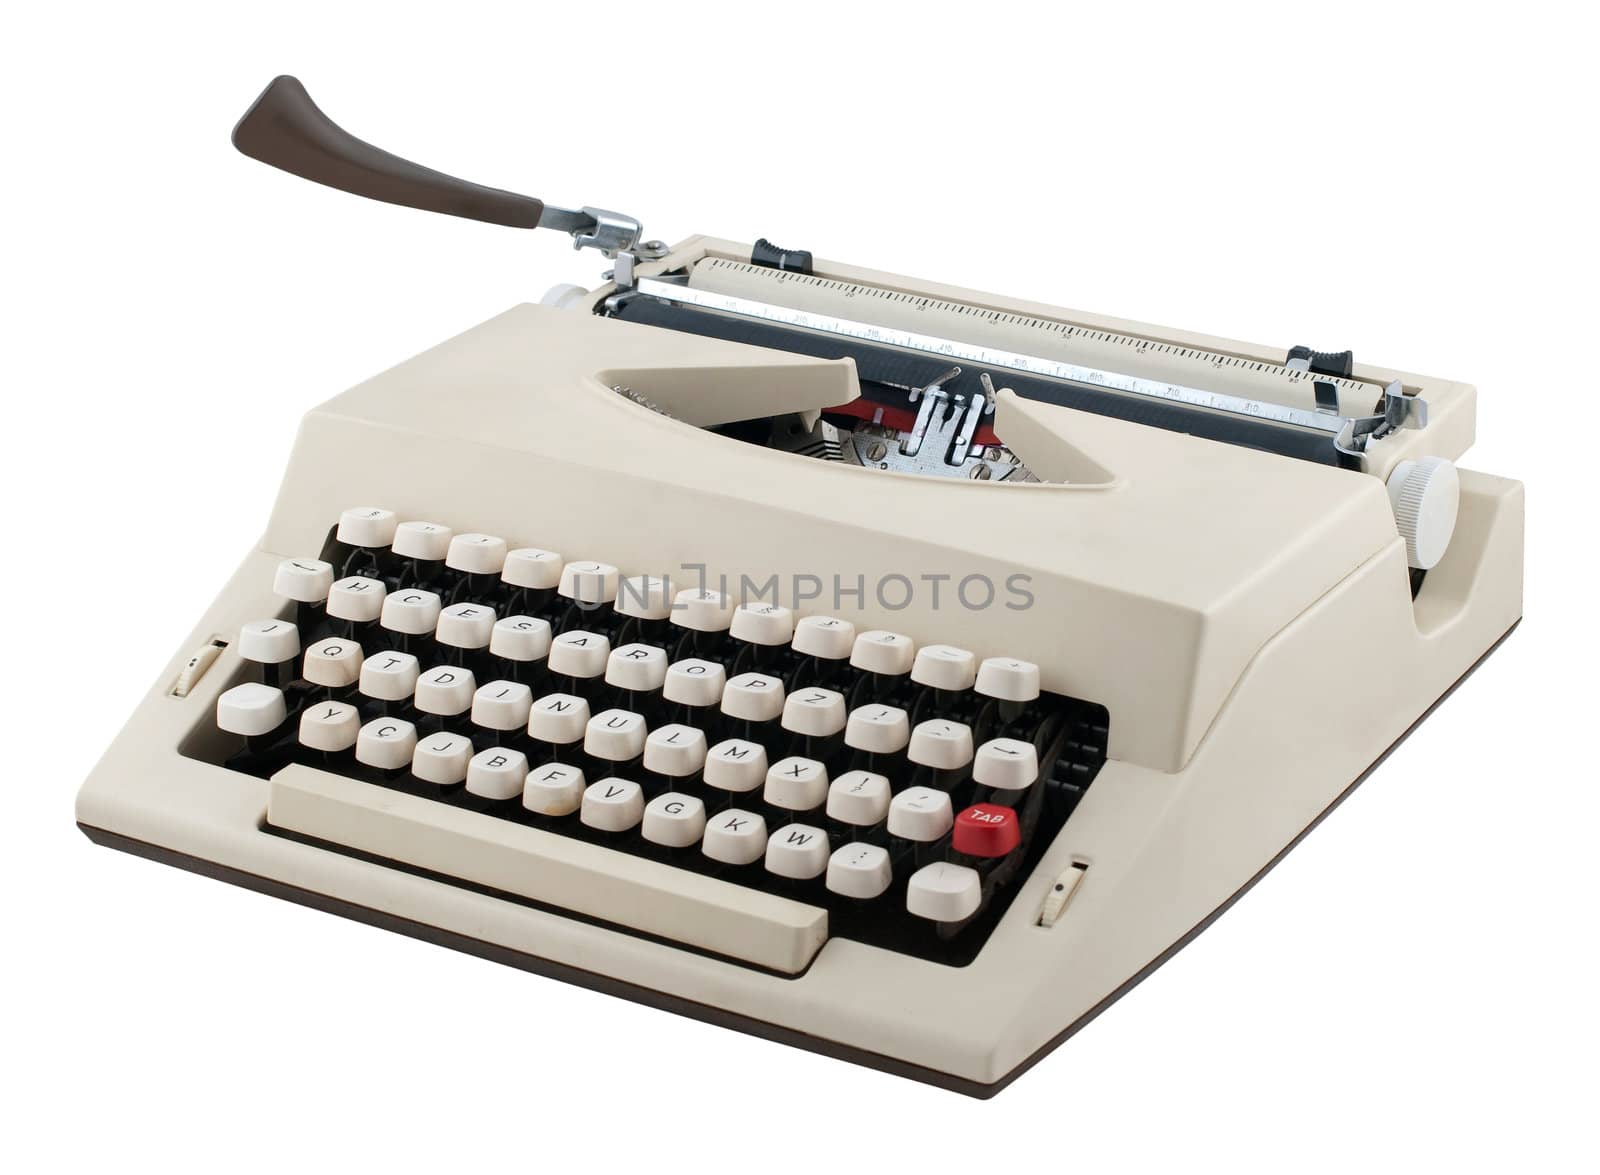 Typewriter by homydesign